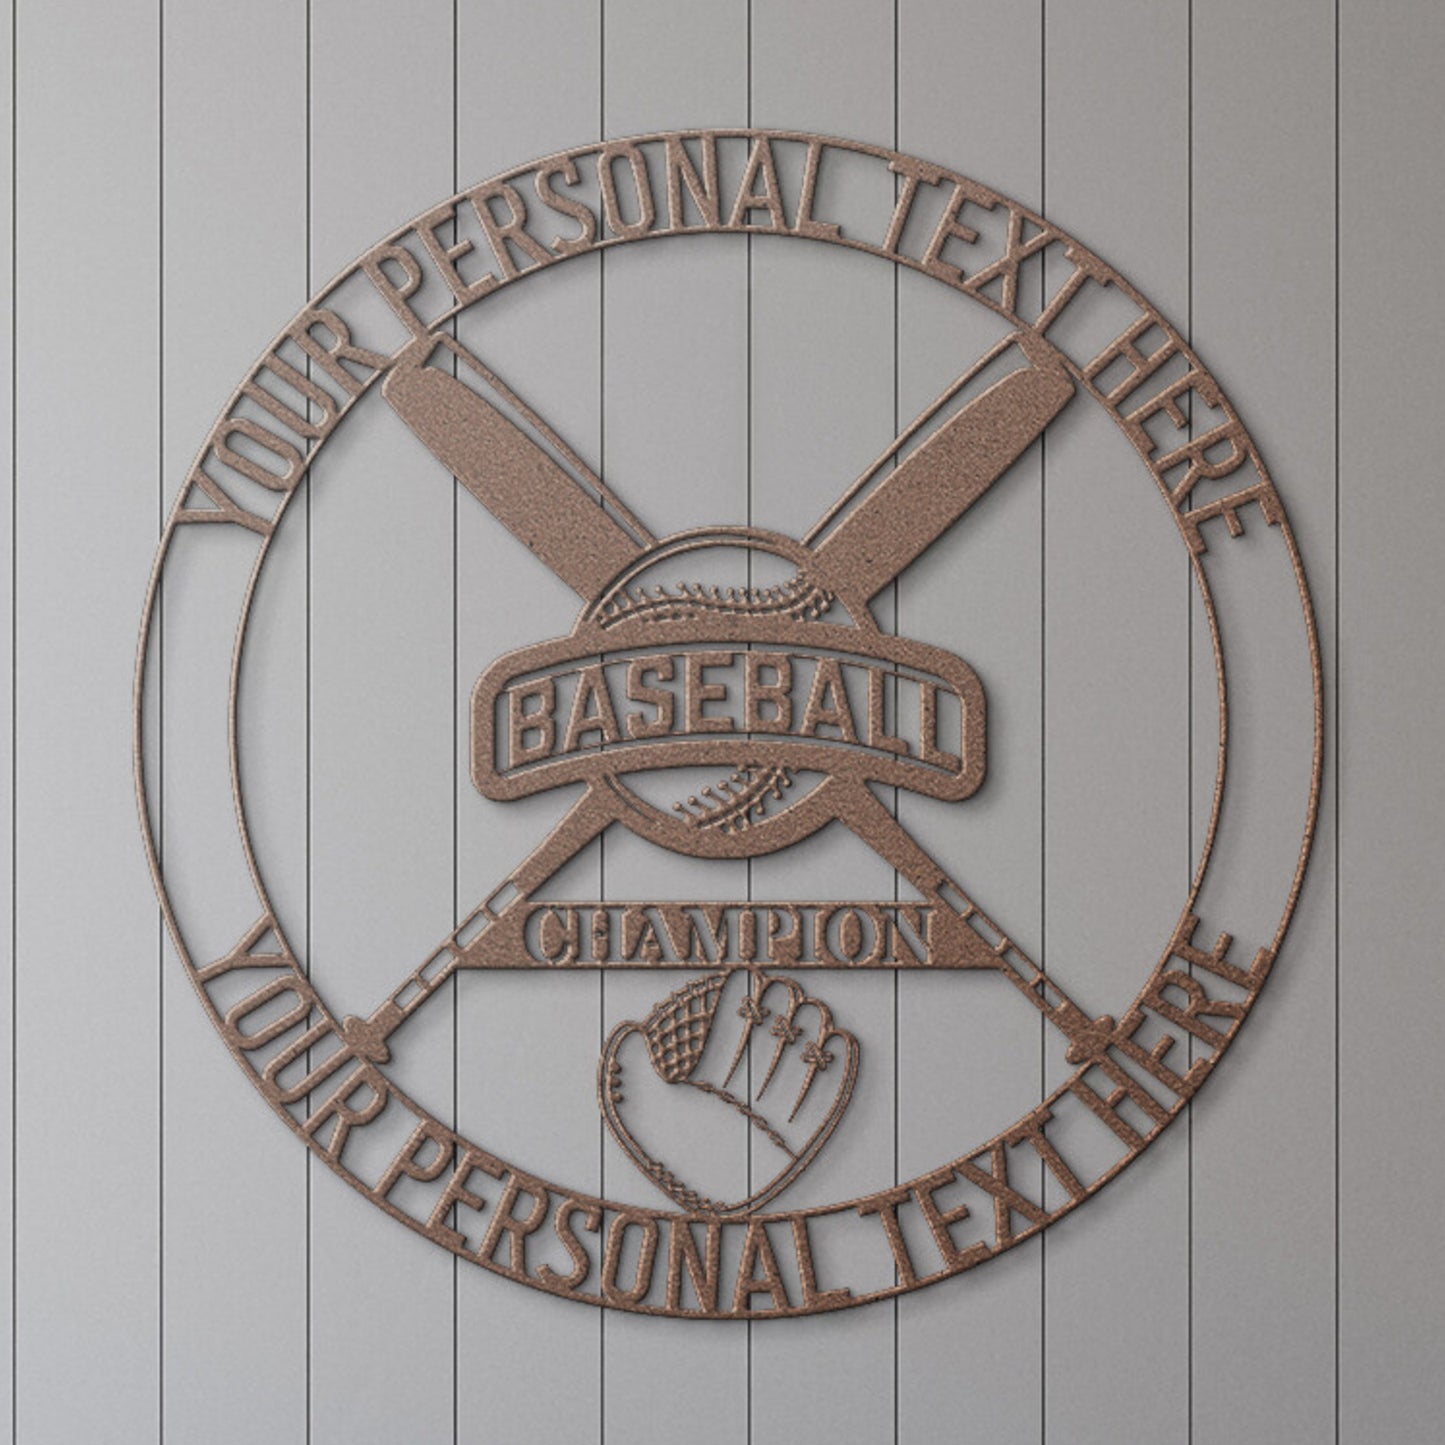 Baseball Bat & Glove Personalized Name Metal Sign. Custom Sports Wall Decor